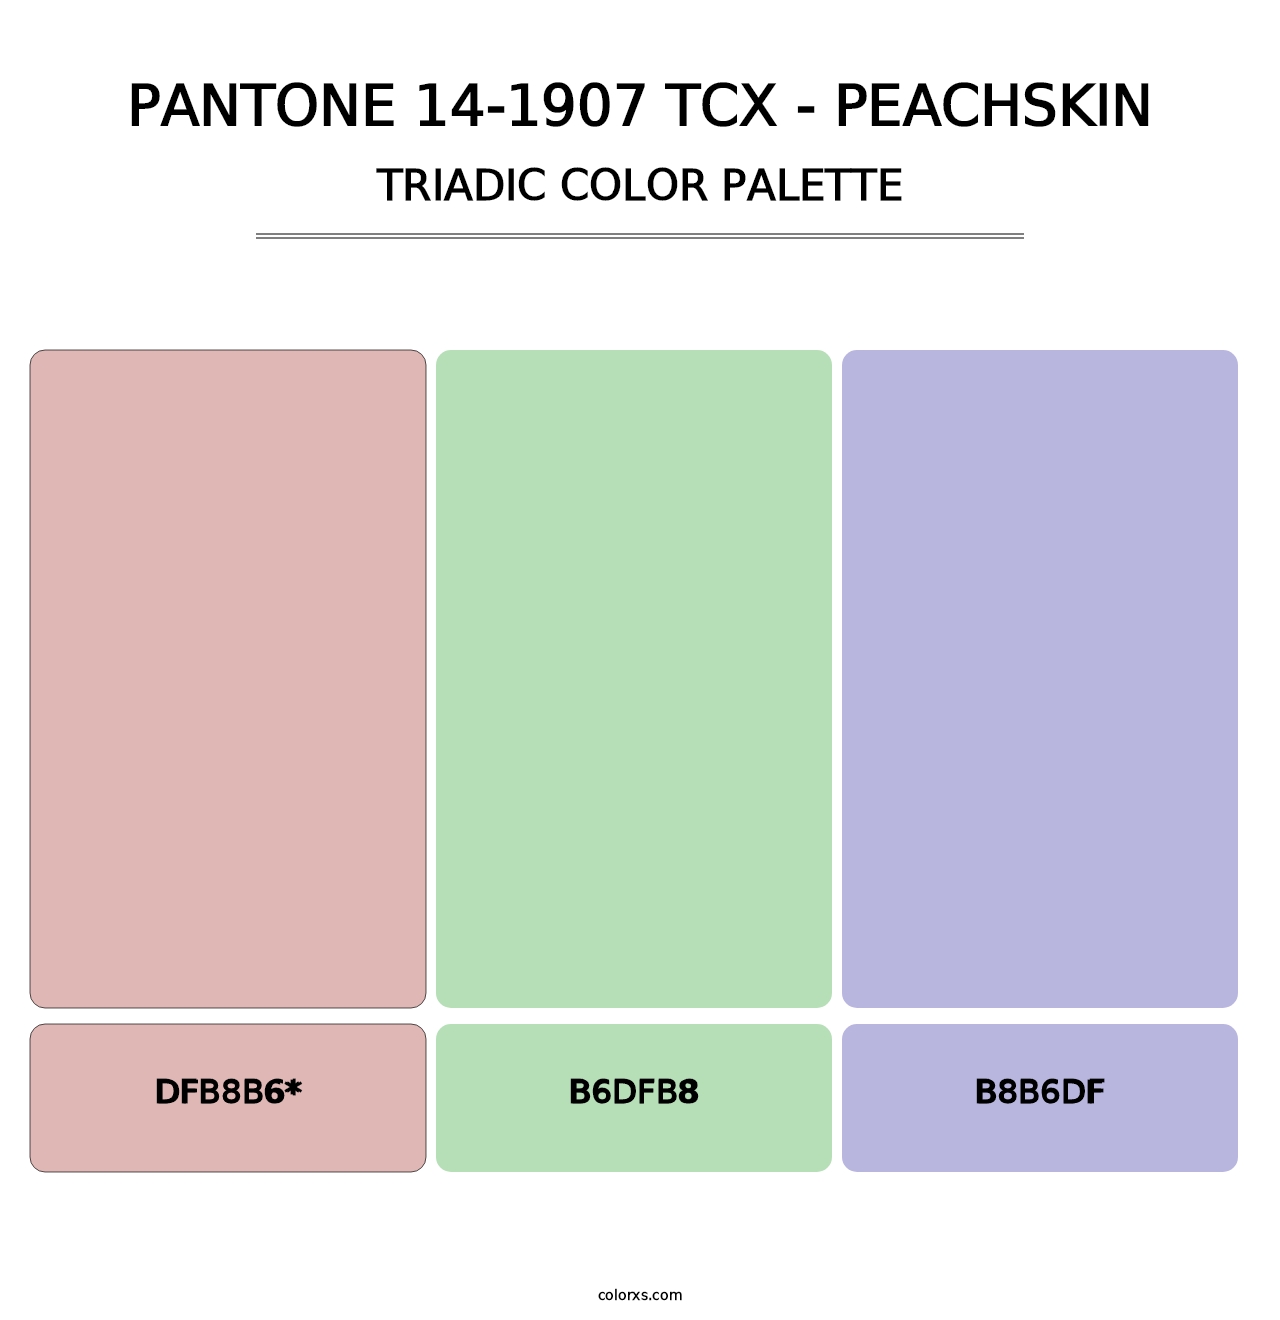 PANTONE 14-1907 TCX - Peachskin - Triadic Color Palette